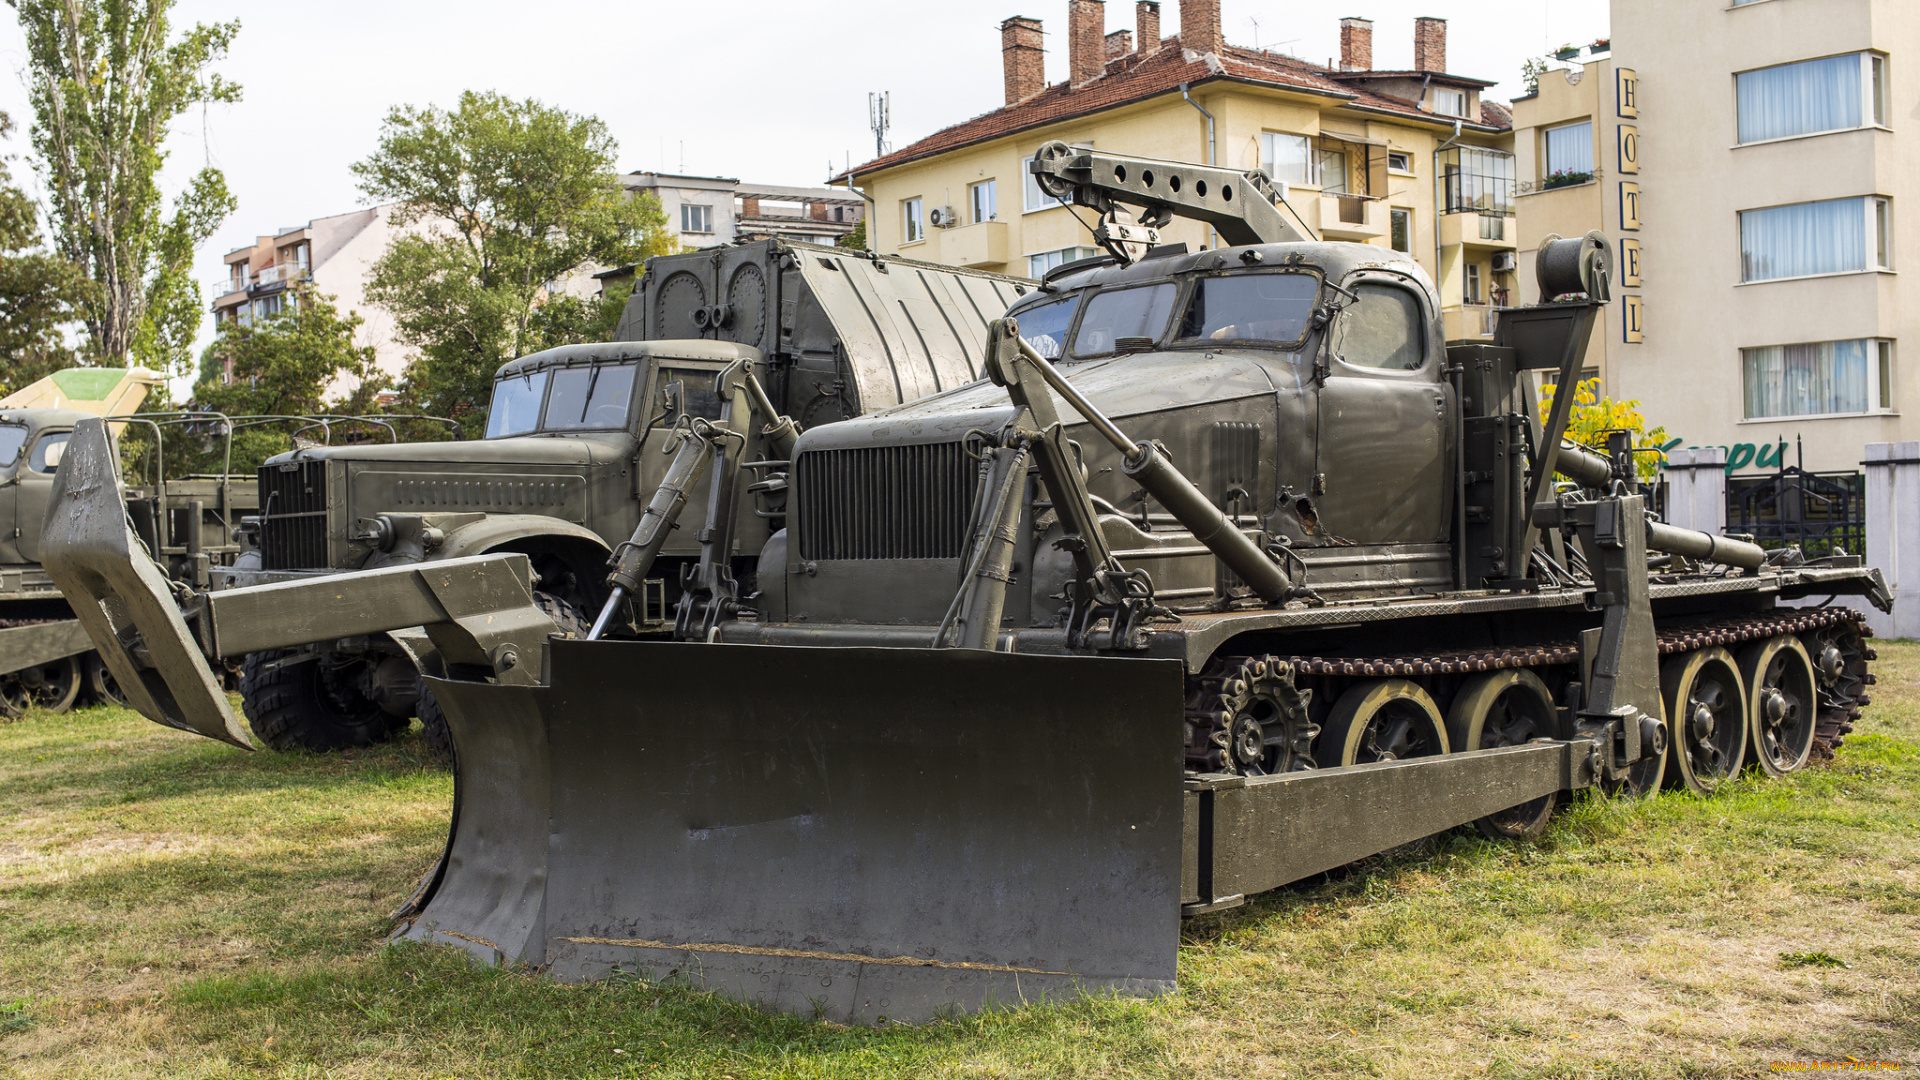 bat-1, bulldozer, with, crane, техника, военная, техника, вооружение, музей